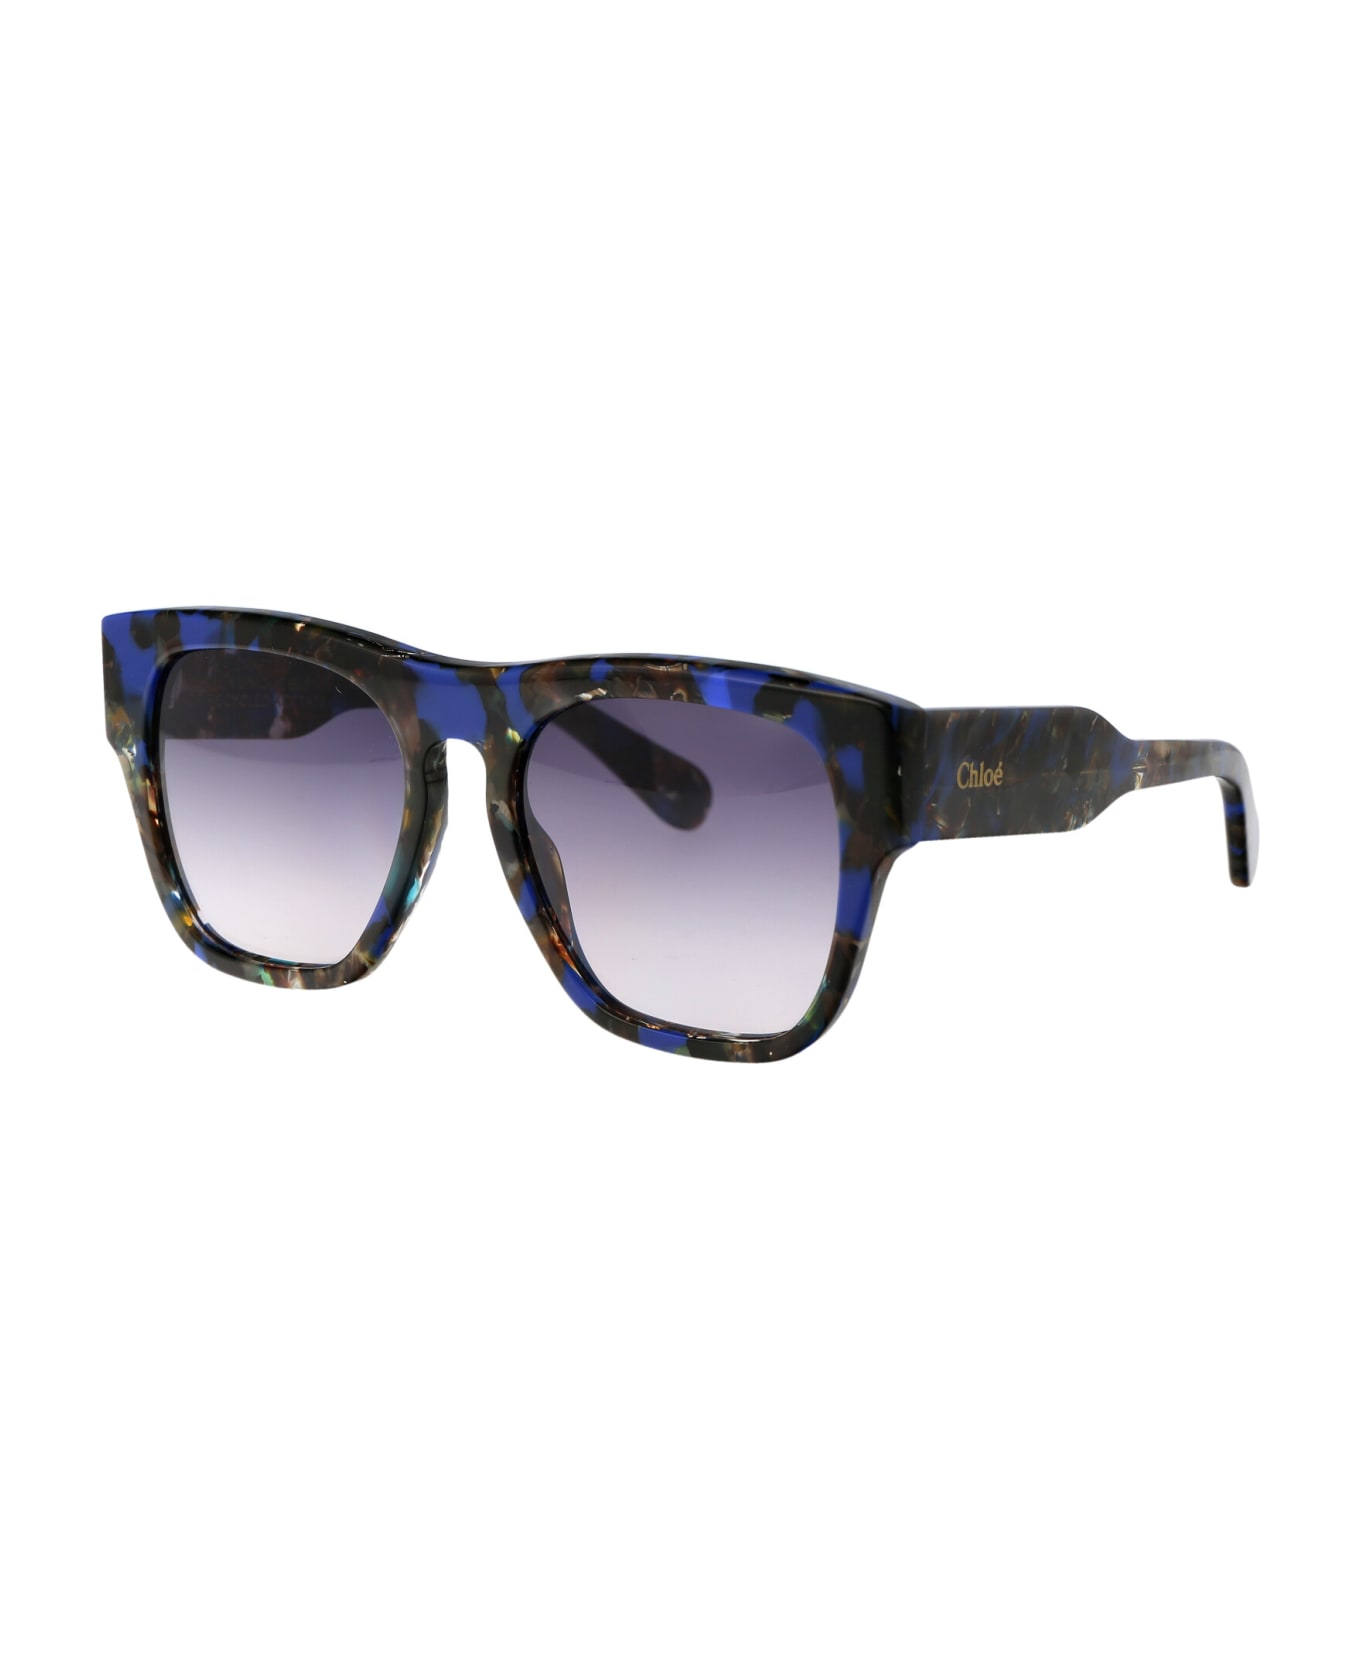 Chloé Eyewear Ch0149s Sunglasses - 008 BLUE BLUE BLUE サングラス